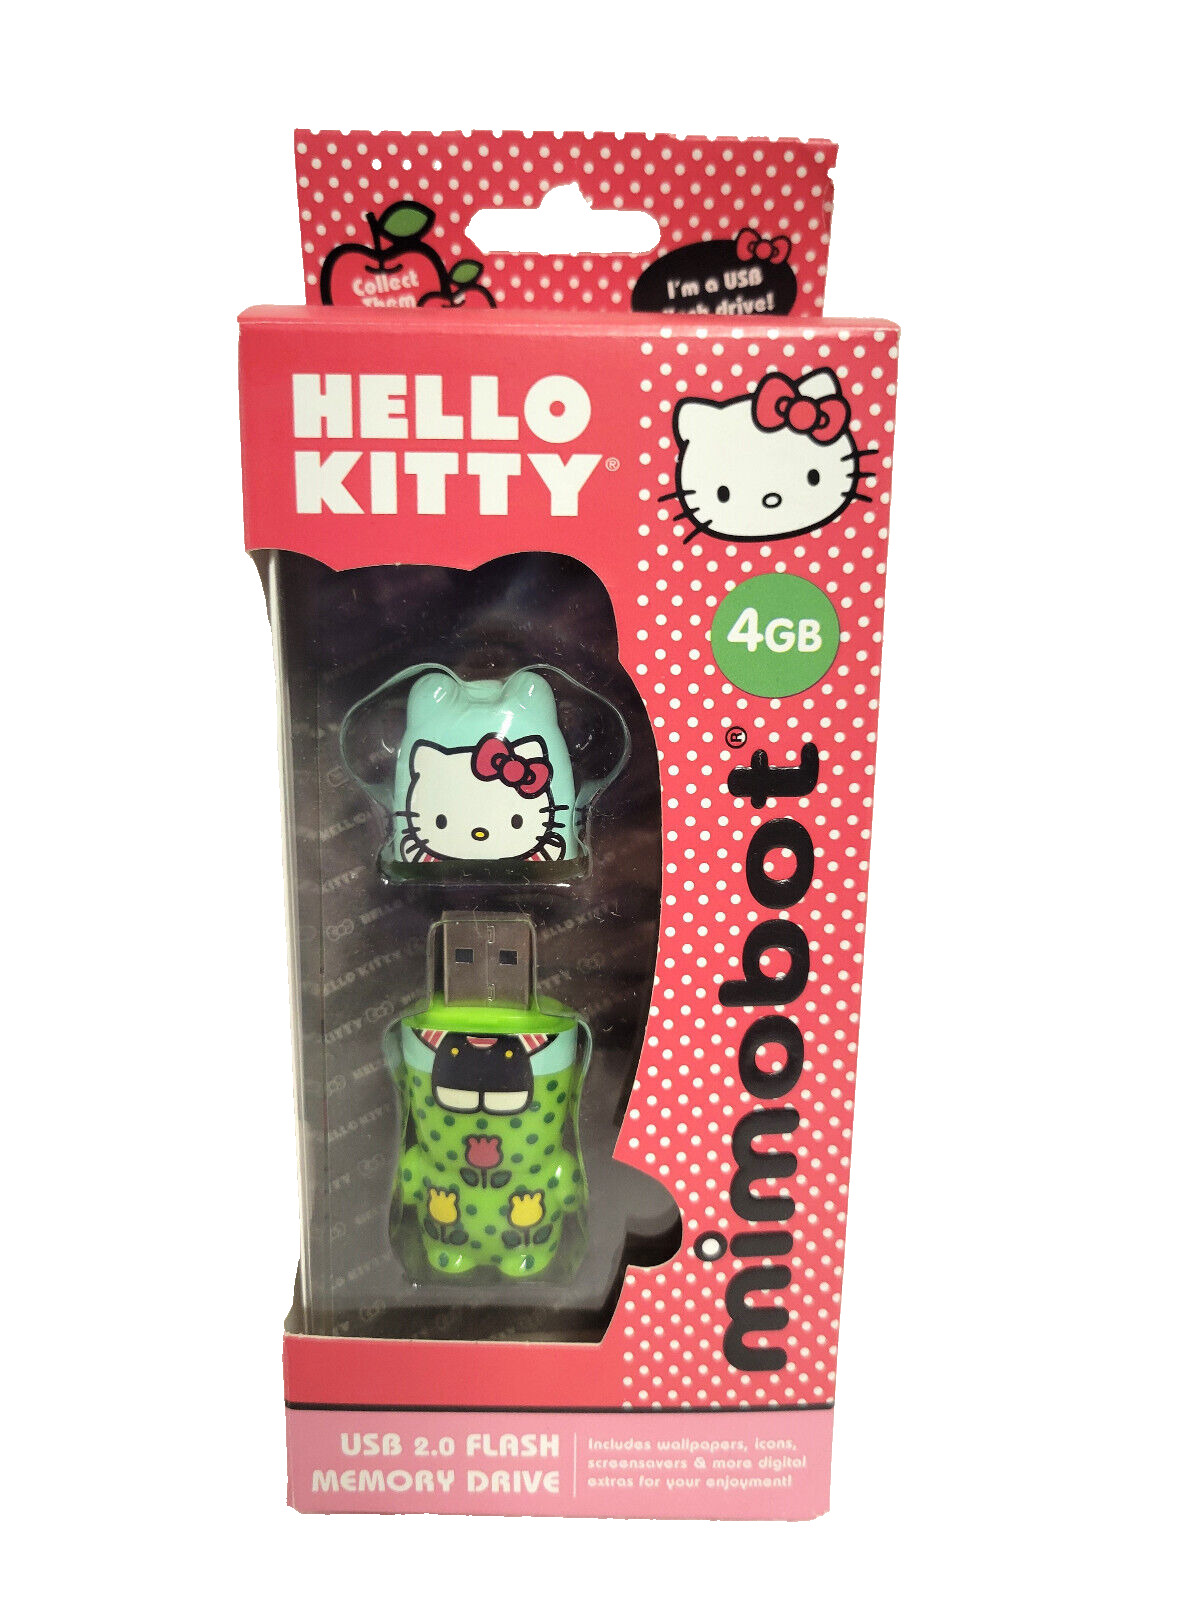 Hello Kitty Mimobot Fun in the Field Cute 4gb USB Flash Memory Drive BRAND NEW